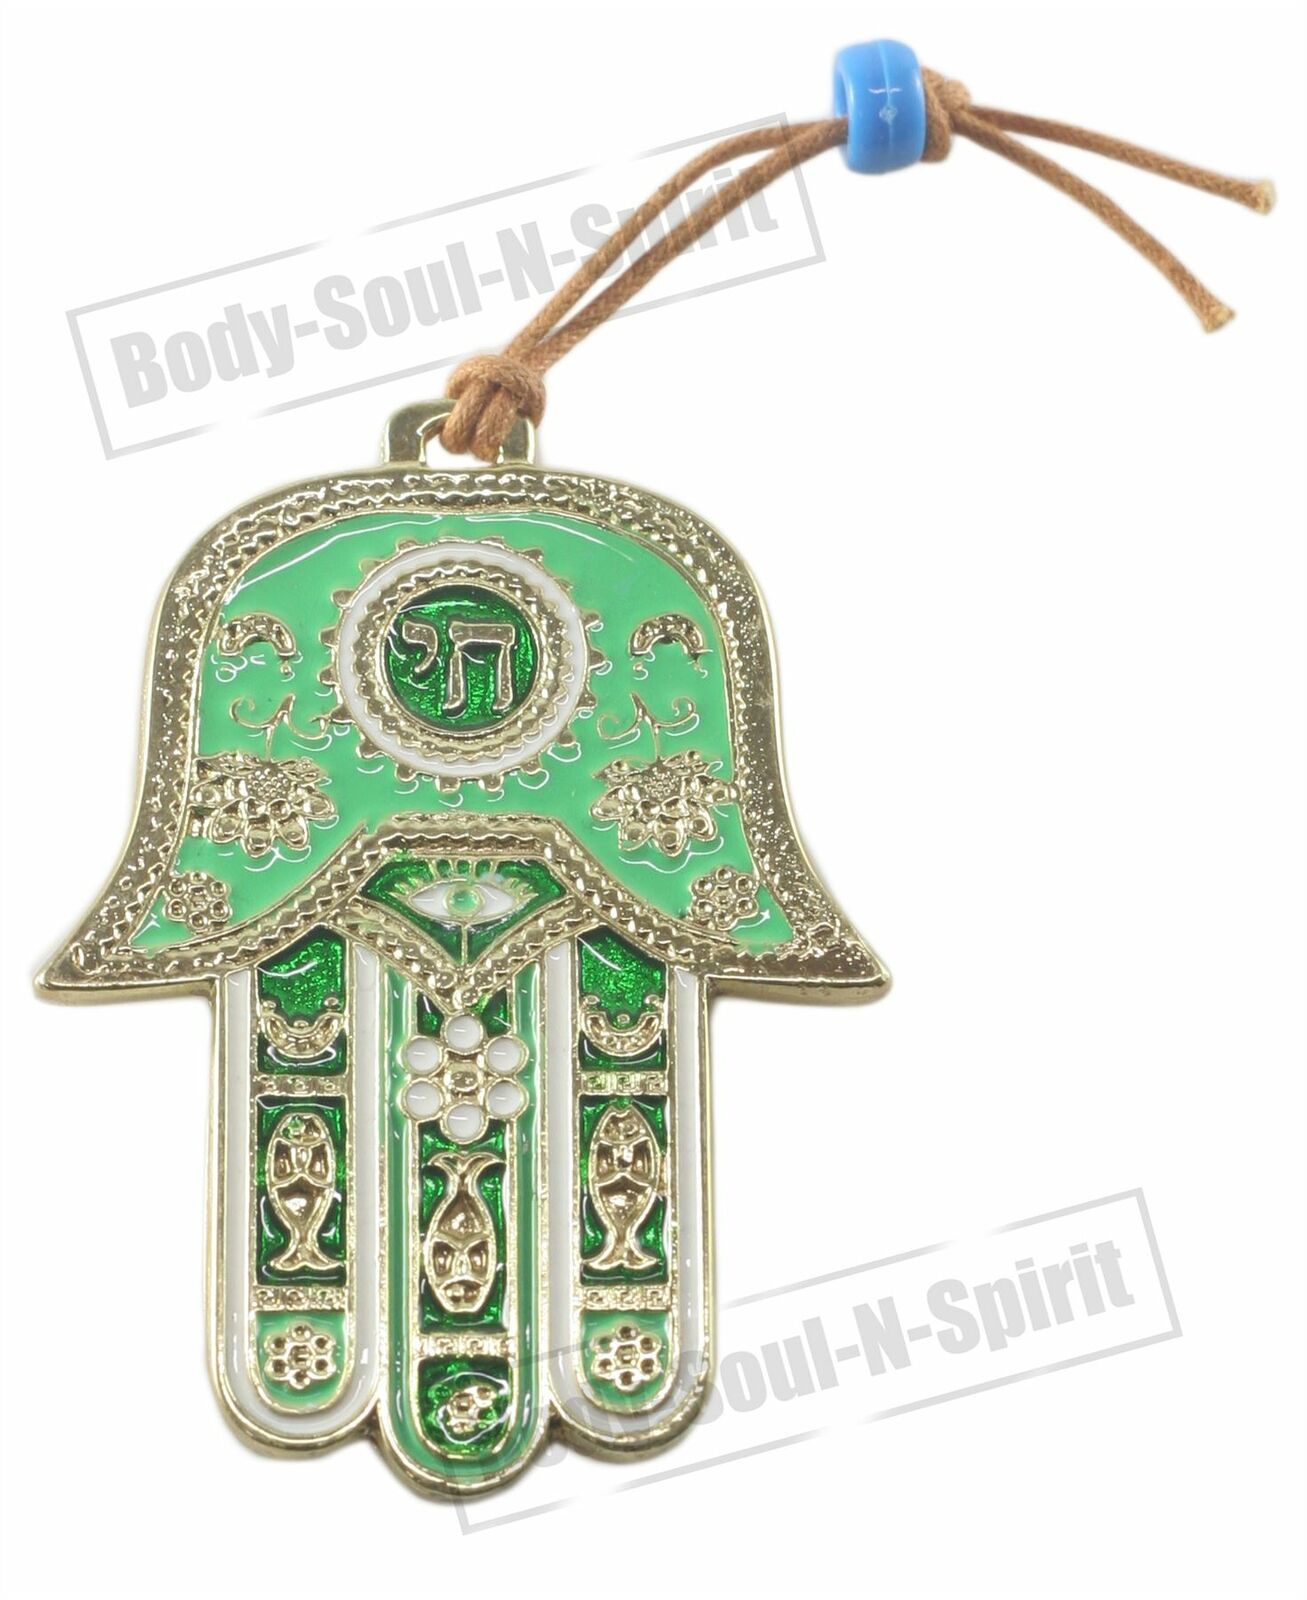 Body-soul-n-spirit - Kabbalah chai hamsa wall hanging judaica gold plated pendant lucky charm gift